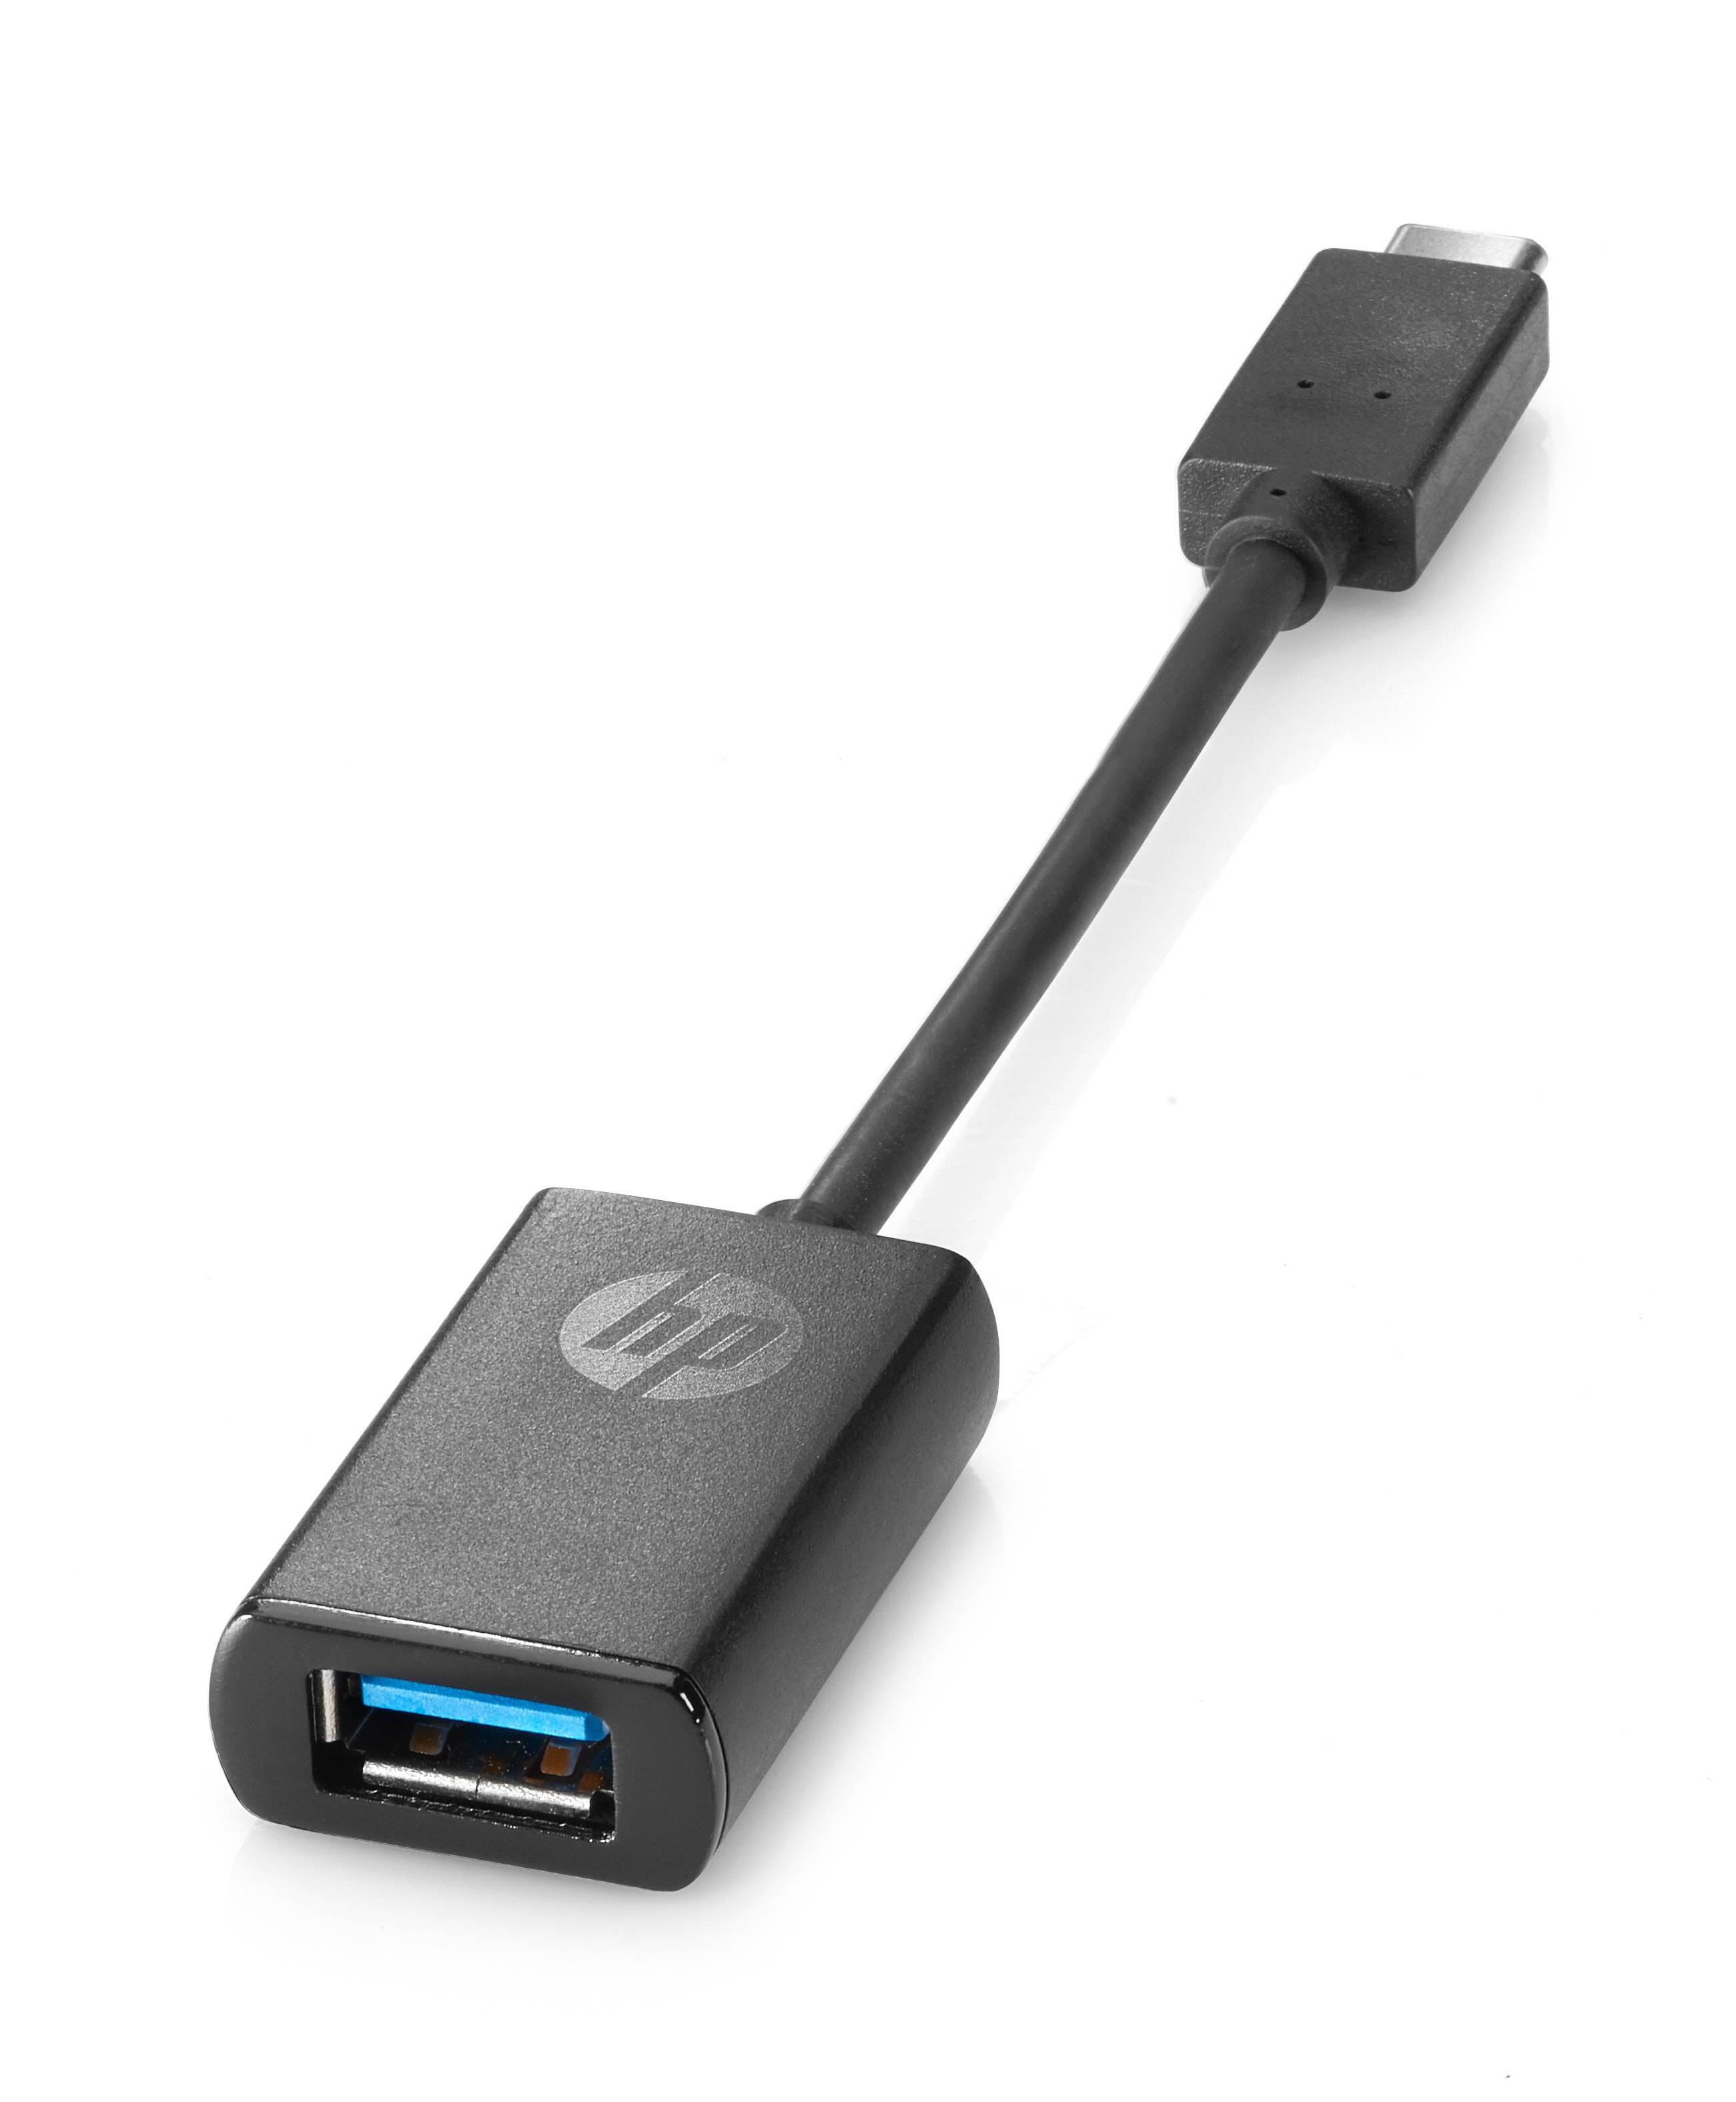 Rca Informatique - Image du produit : HP USB-C TO USB 3.0 ADAPTER F/ DEDICATED HP TABLETS